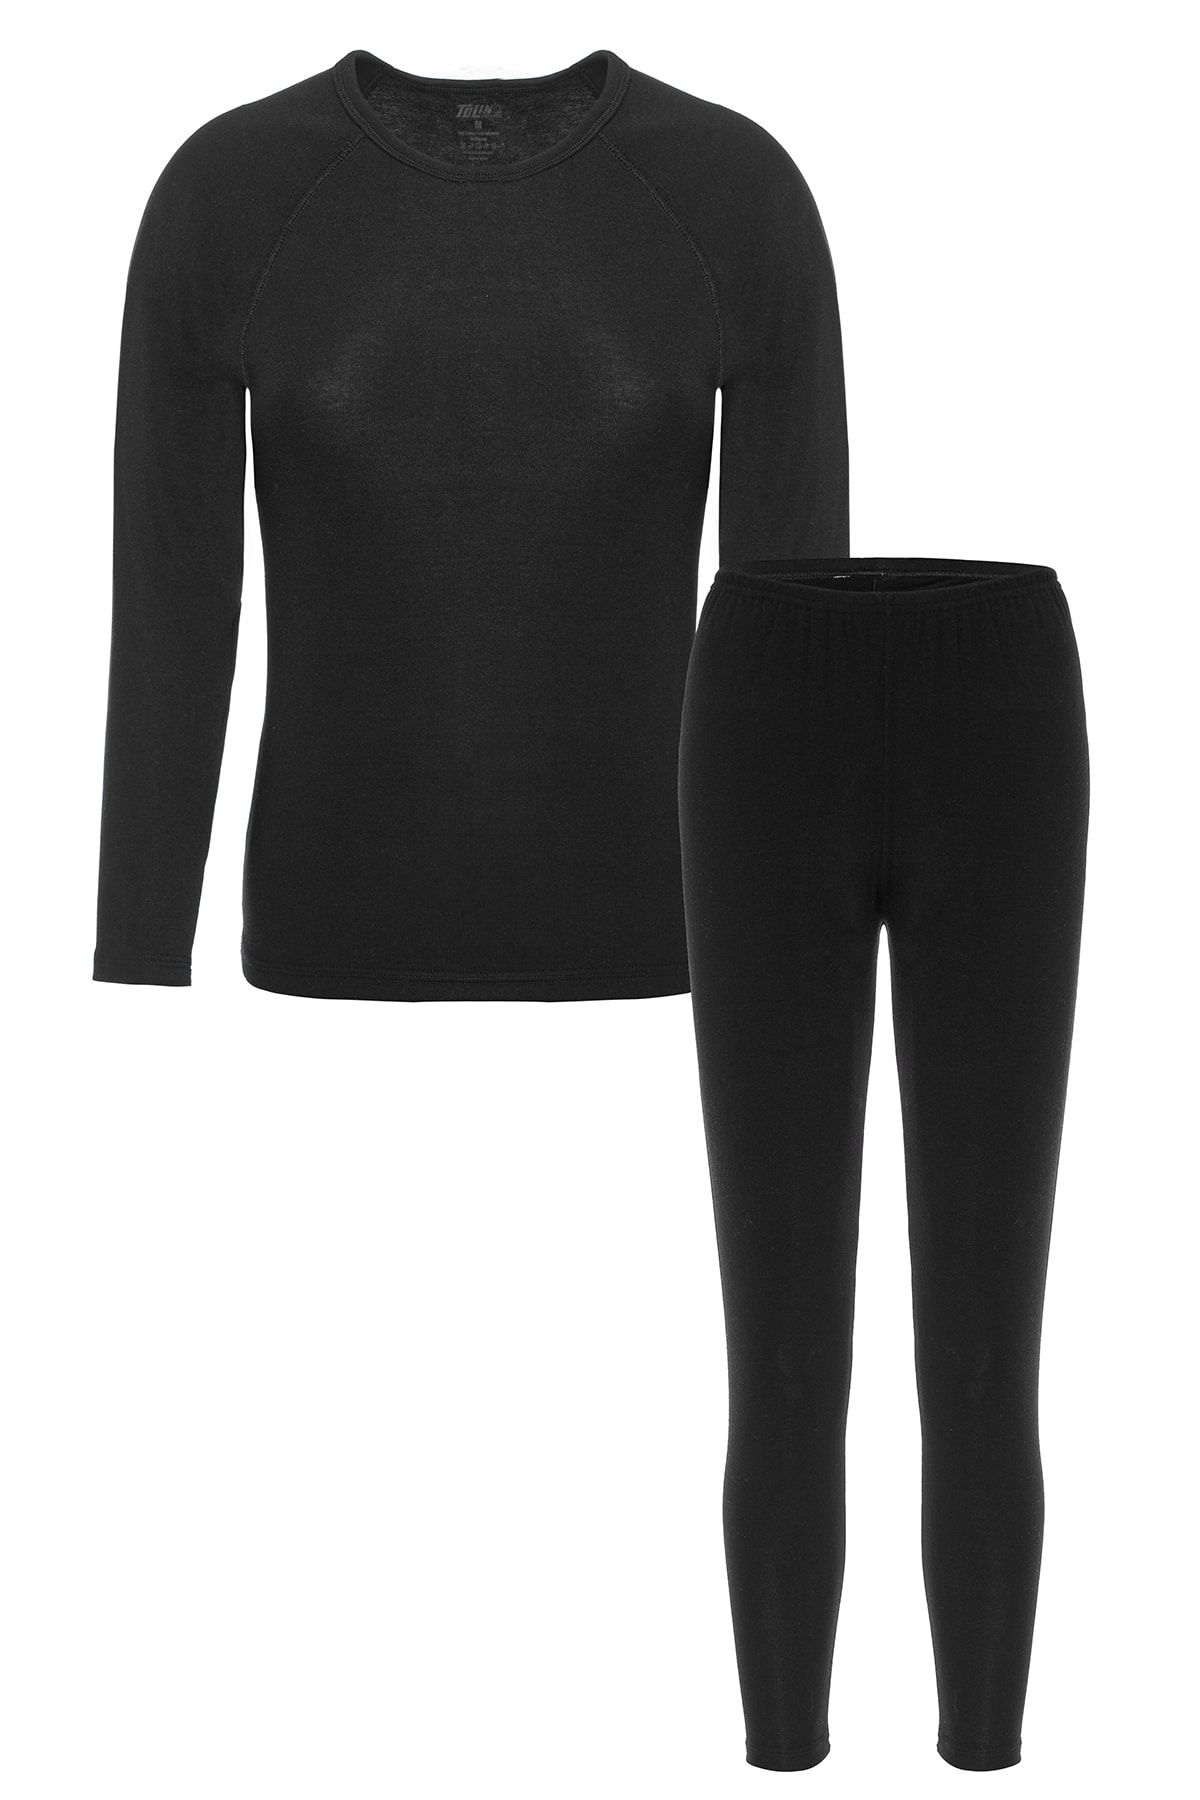 Tolin Women's Thermal Underwear Set Black 8290 - Trendyol